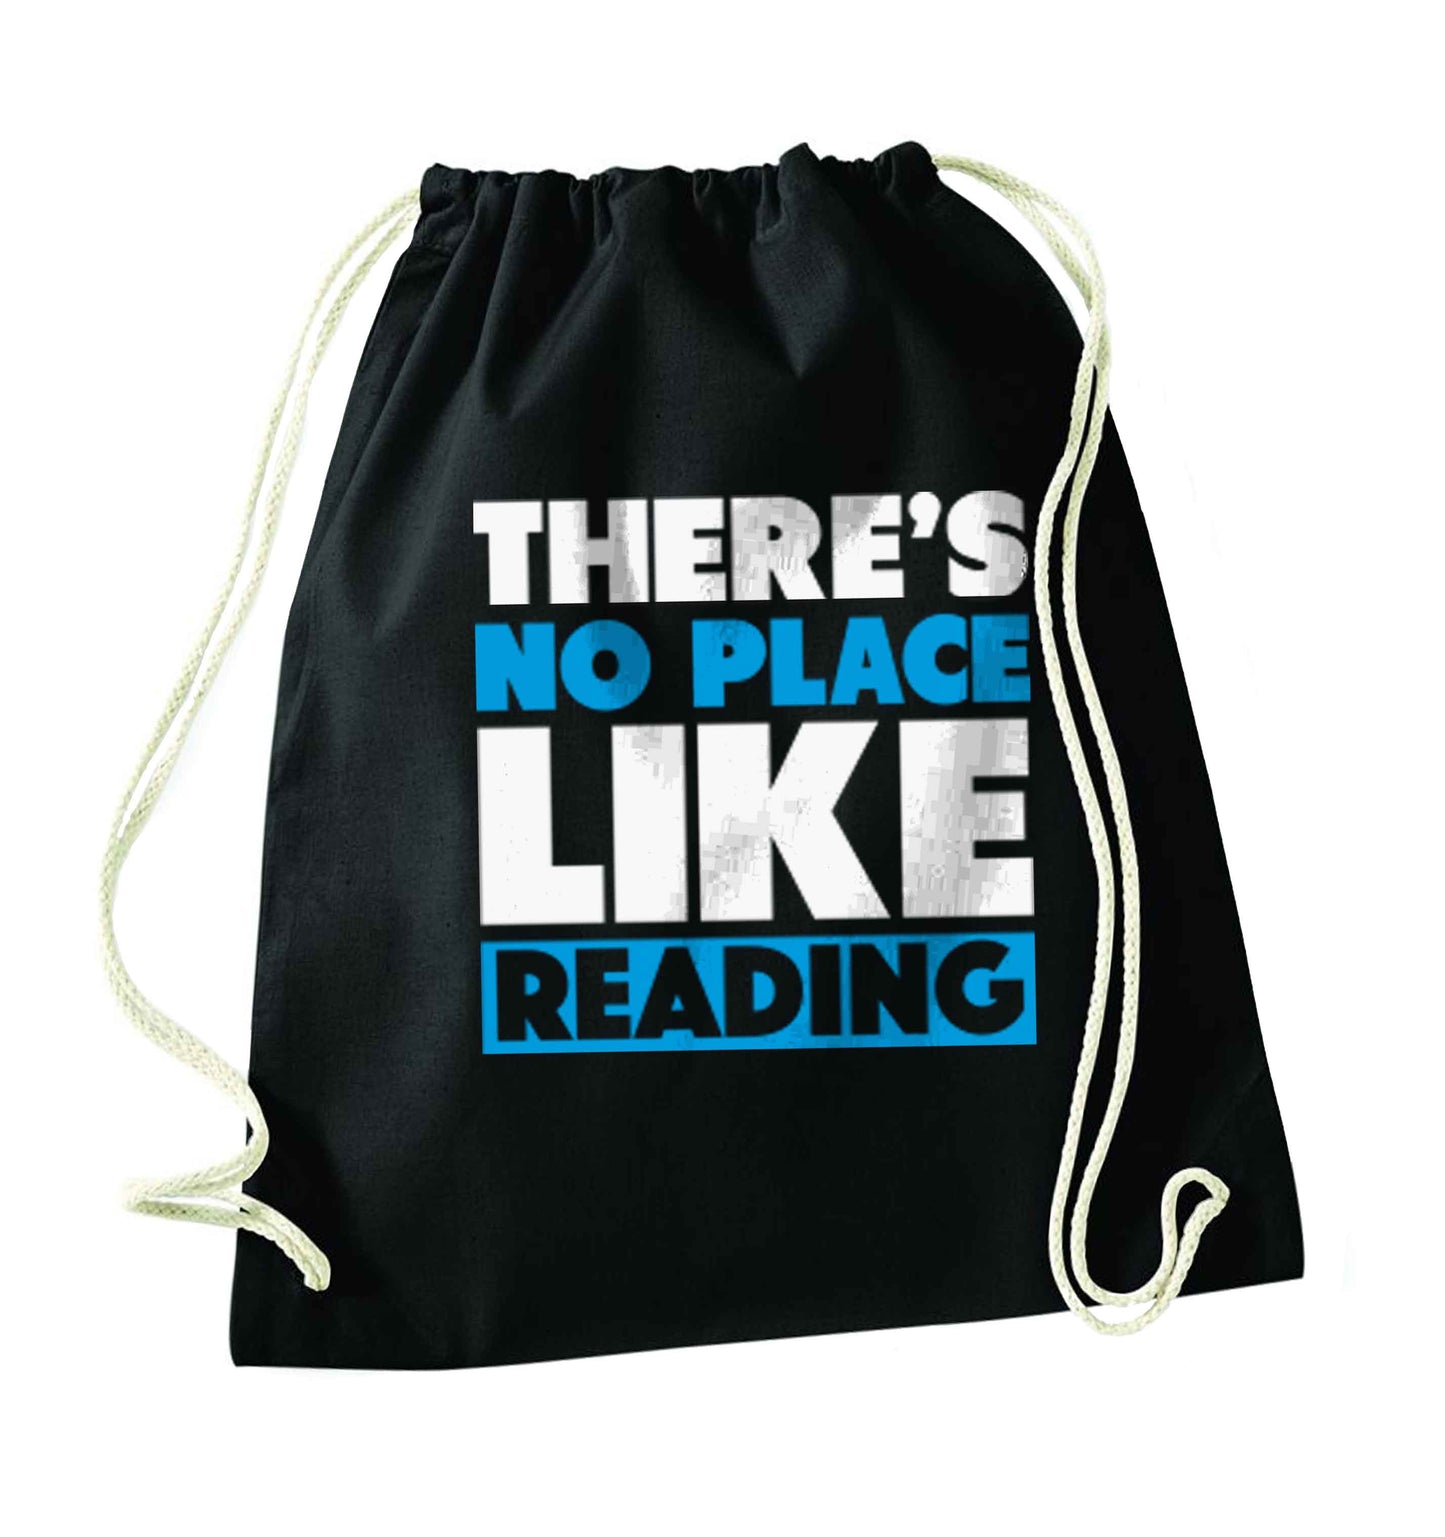 There's no place like Readingblack drawstring bag